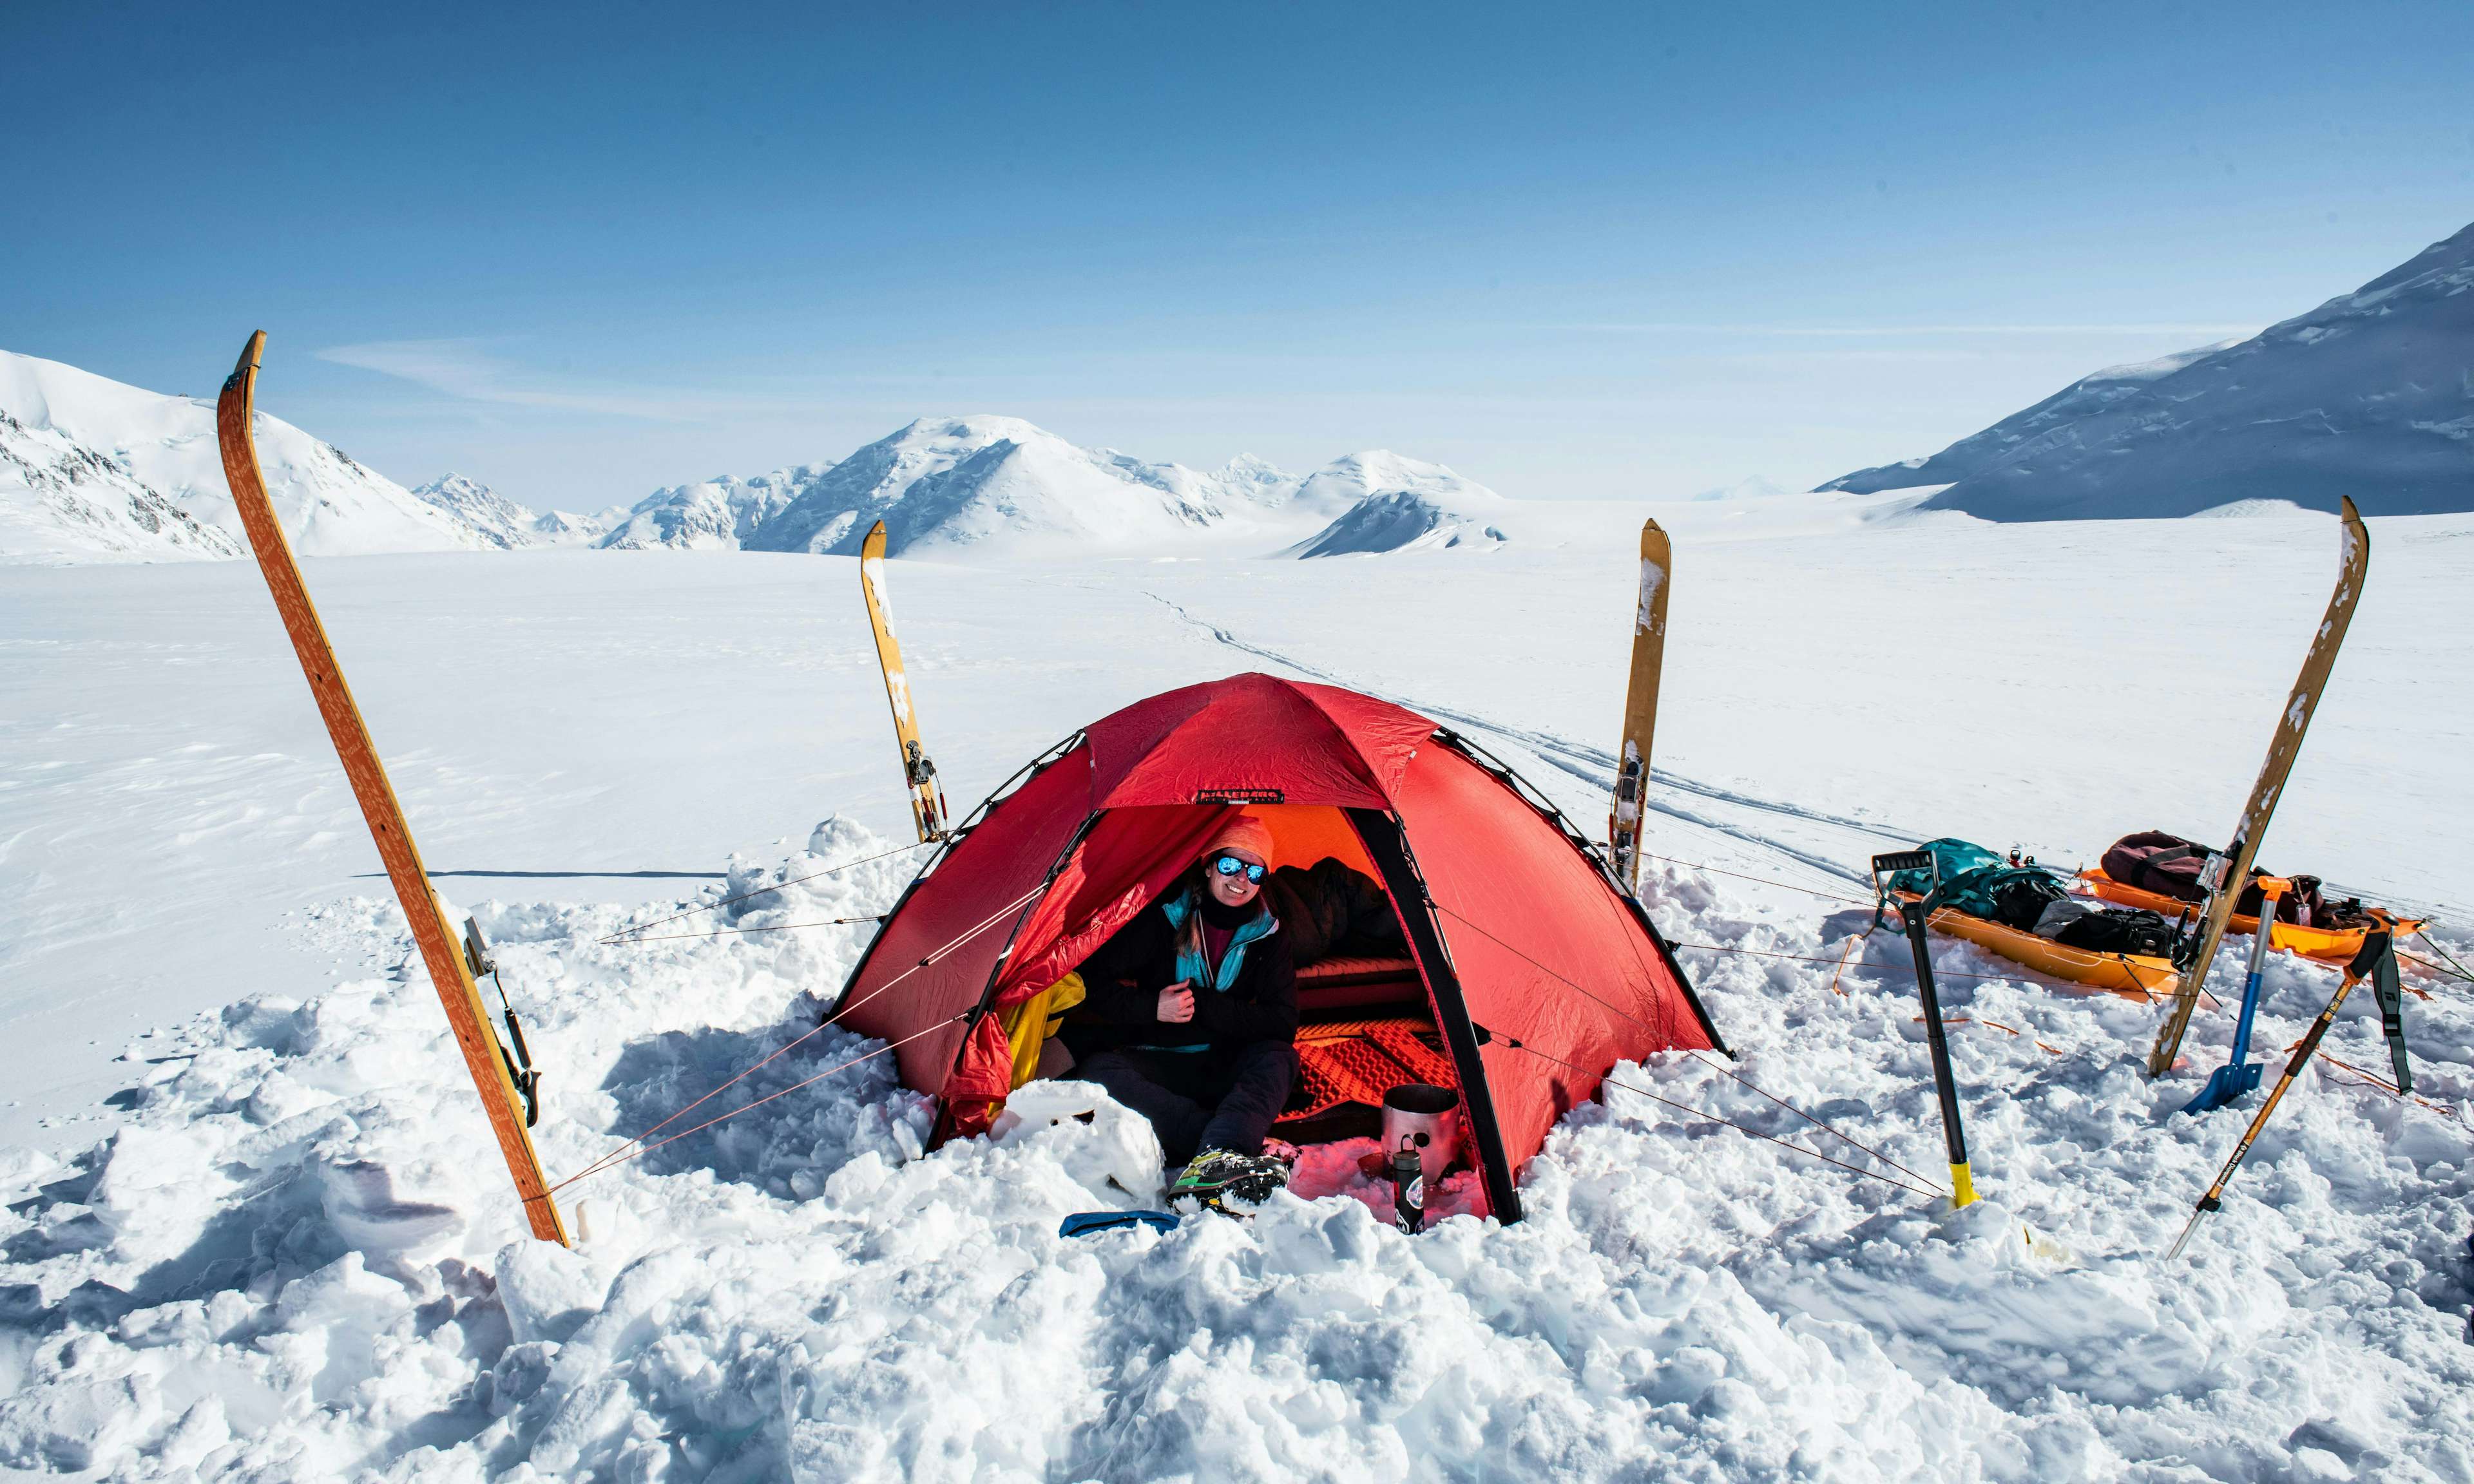 Expedition camp on a glacier